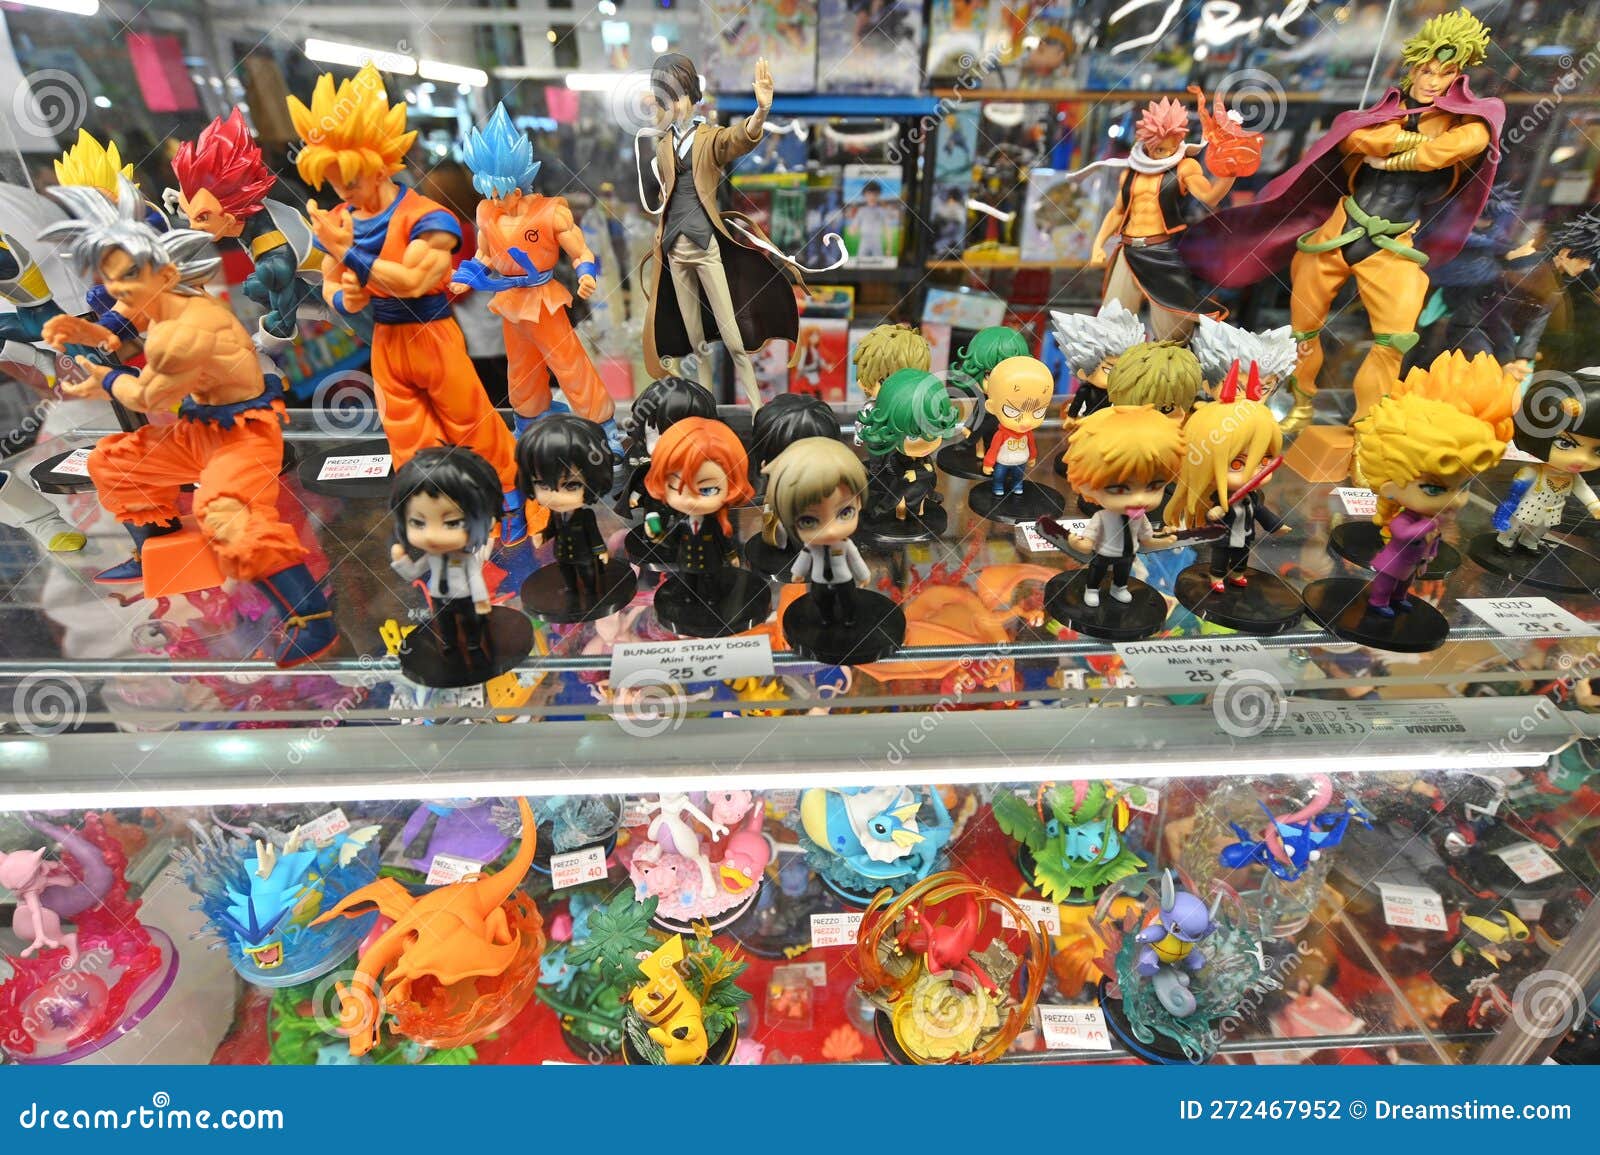 Here Are the WonHobby 36 Anime Figures and Nendoroids - Siliconera